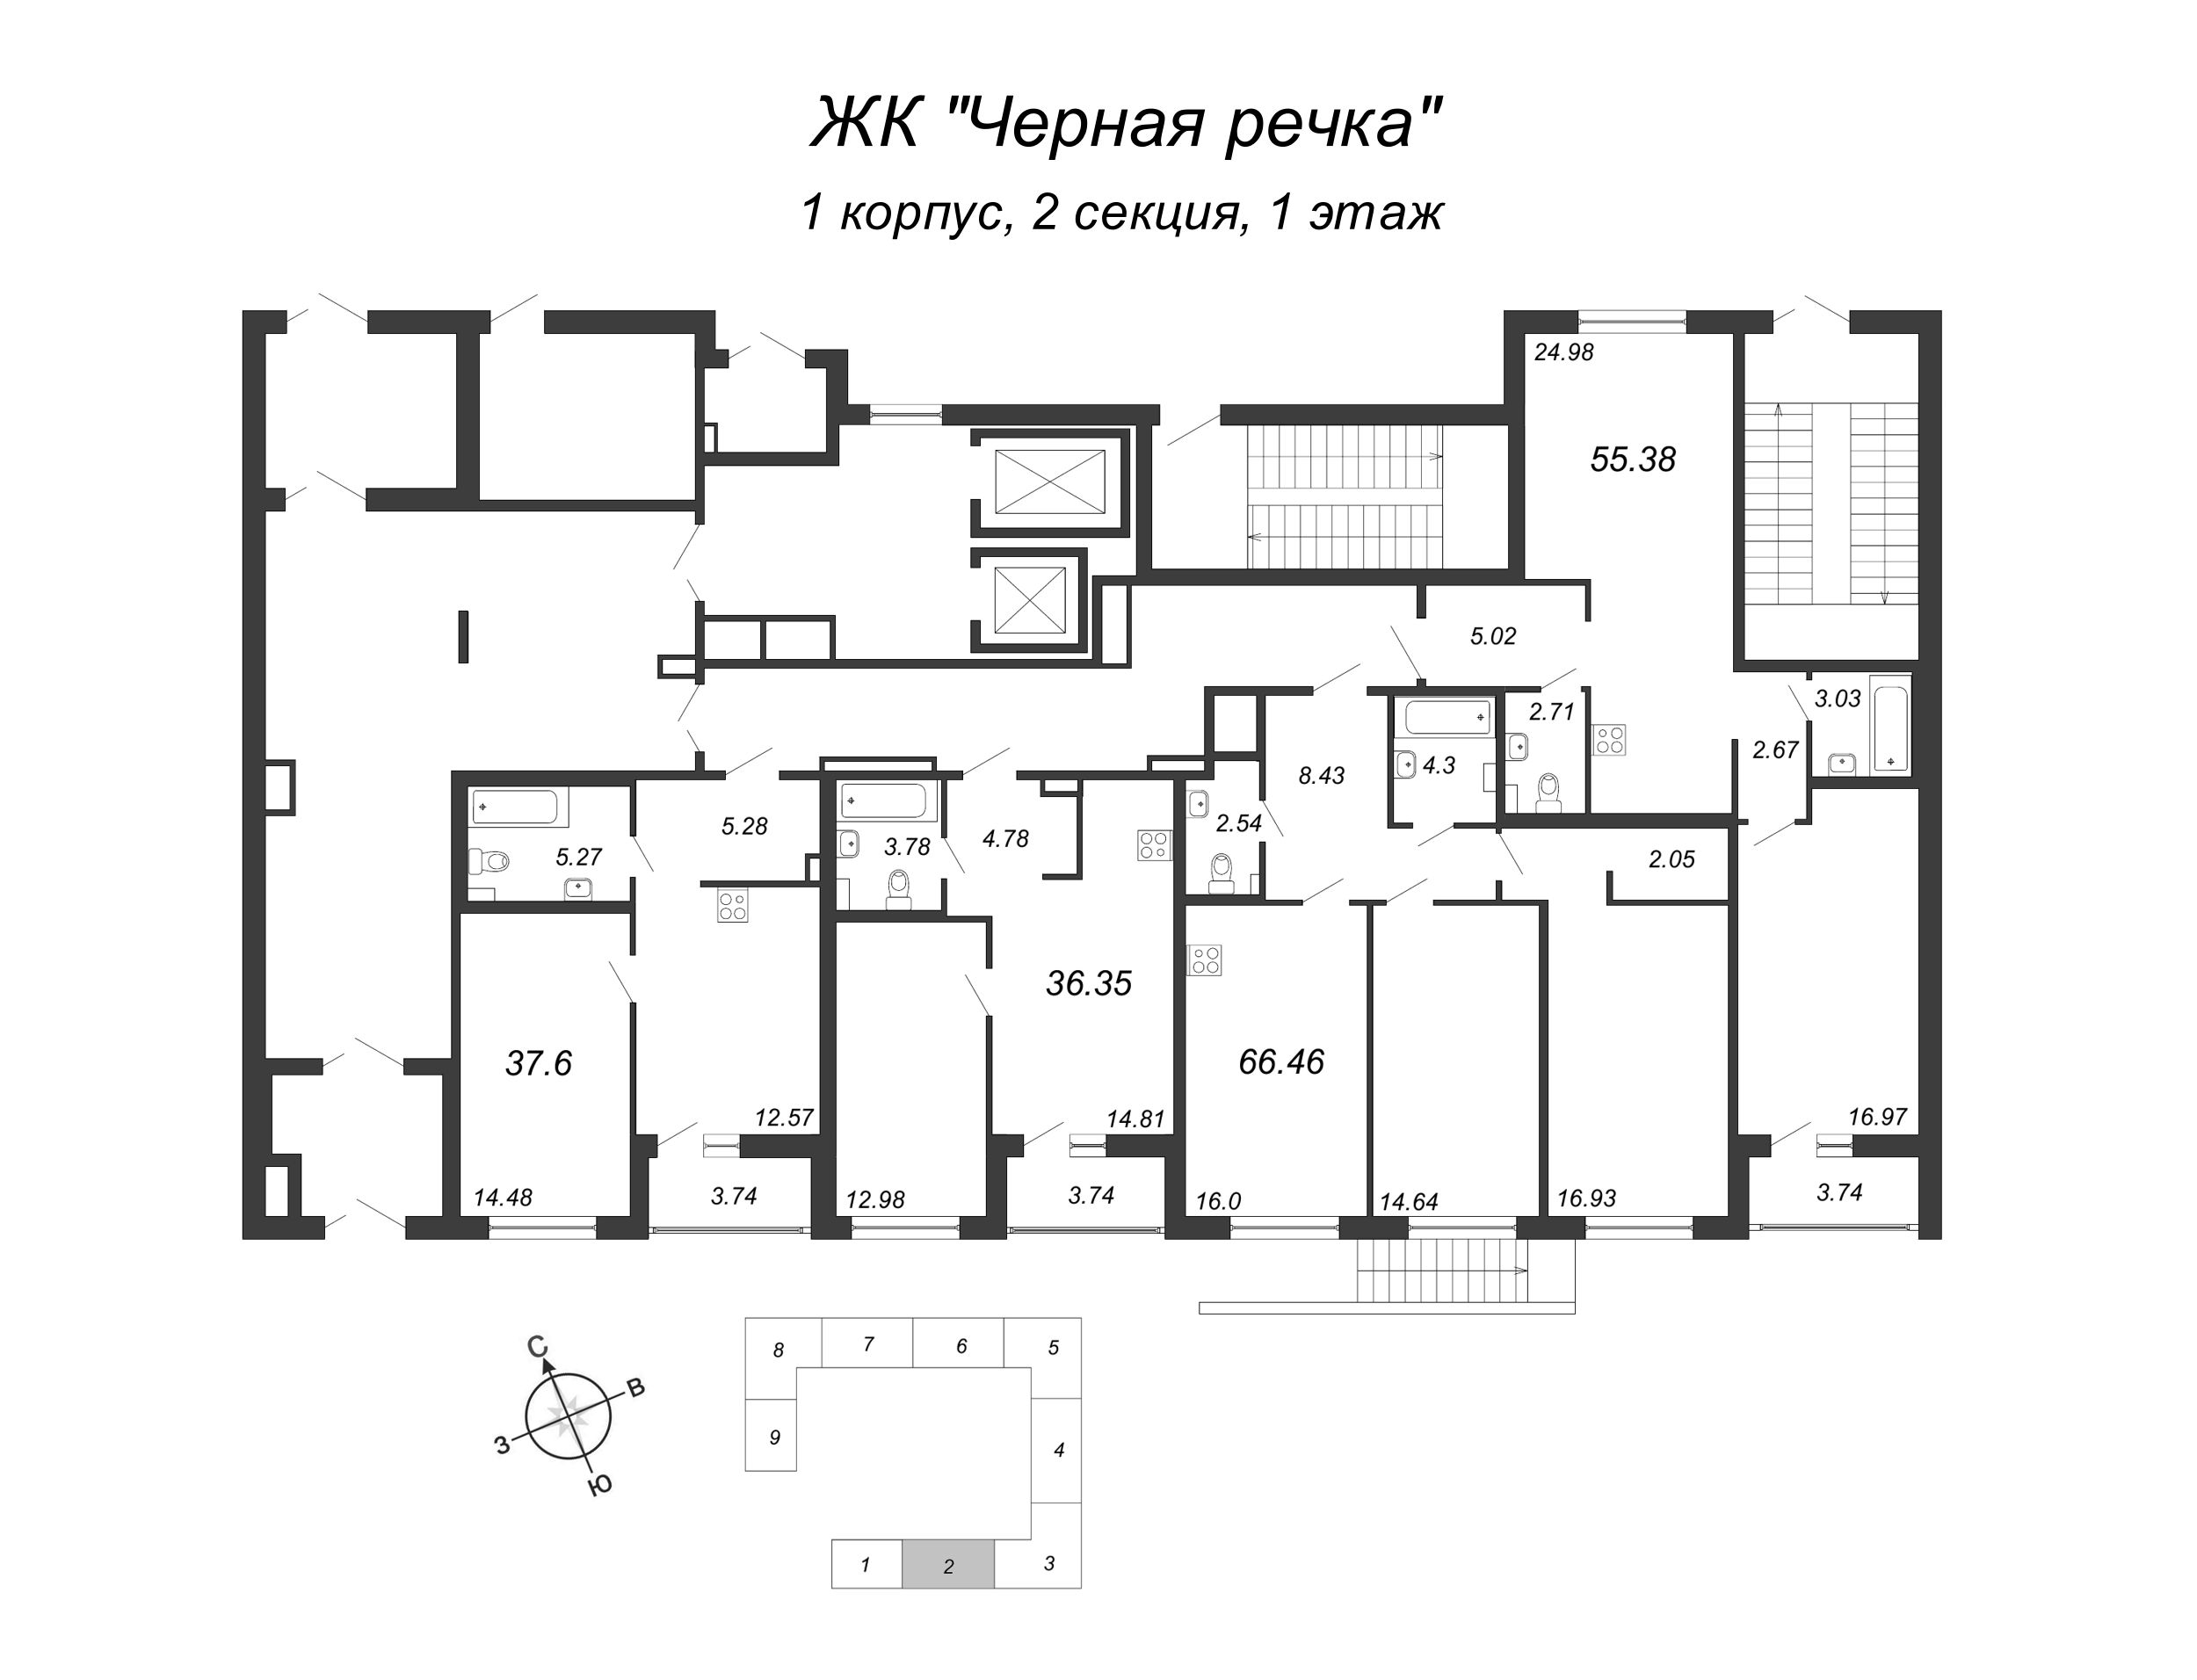 3-комнатная (Евро) квартира, 66.46 м² в ЖК "Чёрная речка от Ильича" - планировка этажа